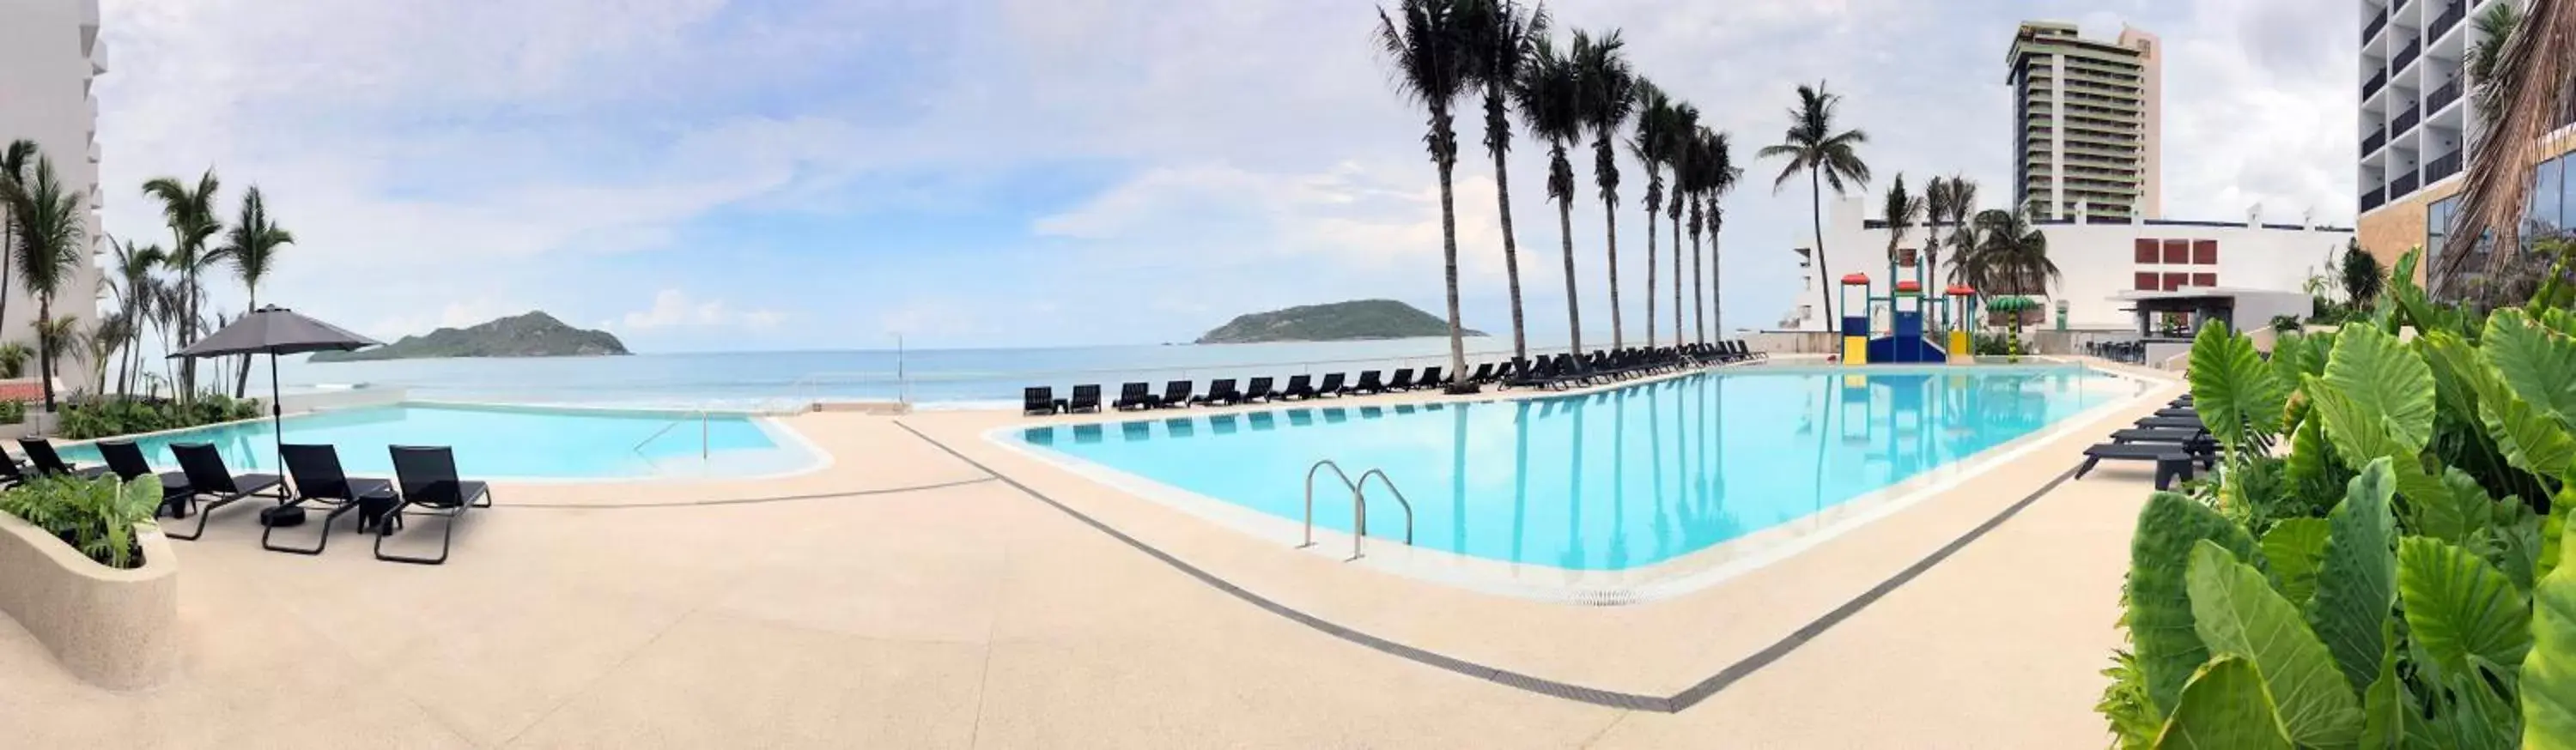 Swimming Pool in Viaggio Resort Mazatlán